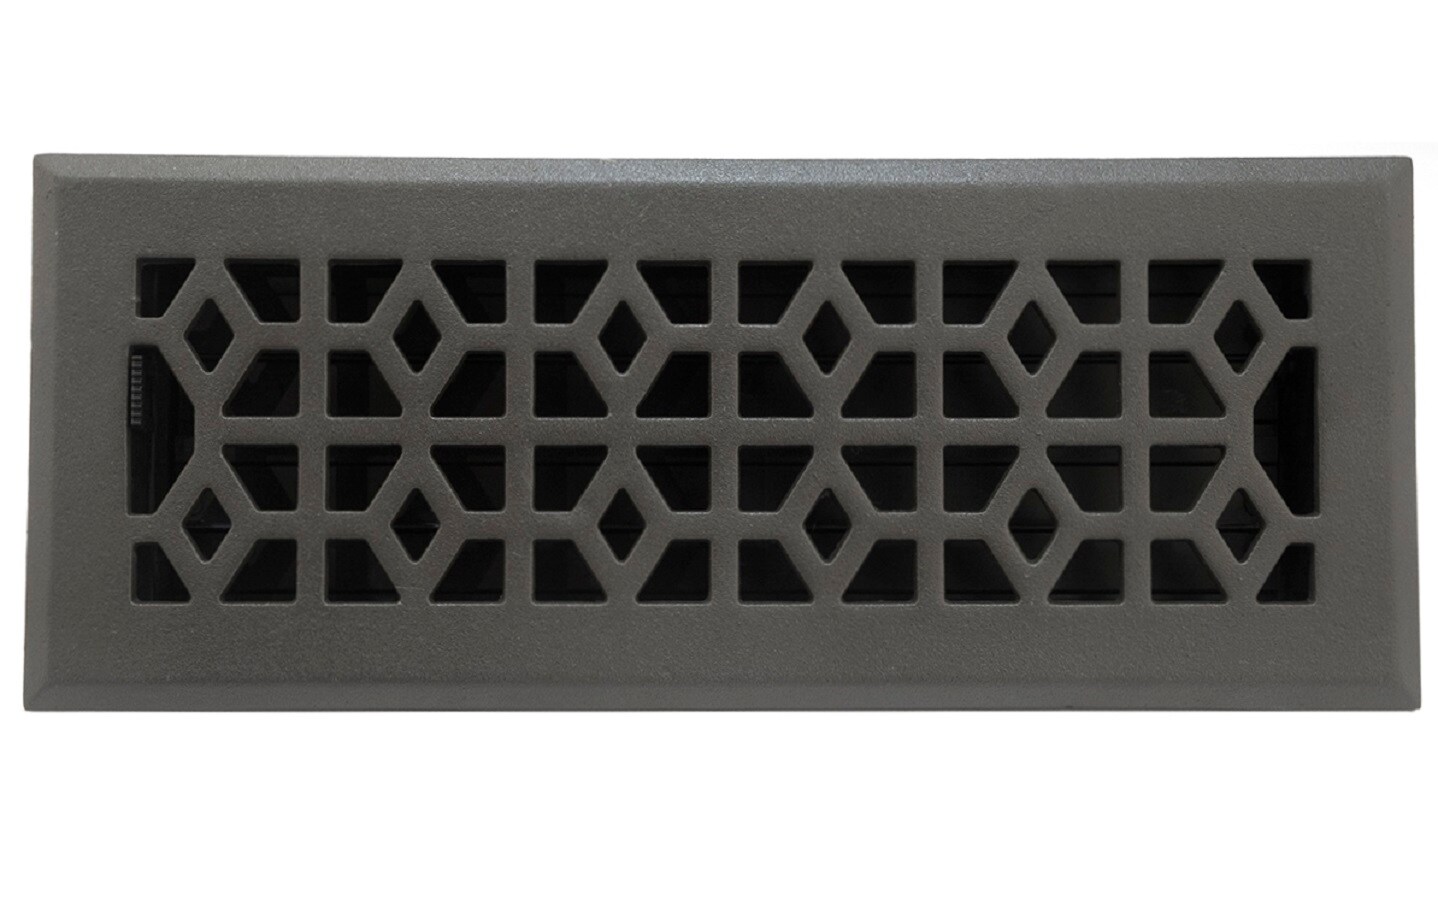 4" x 12 Marquis Cast-Iron Black Metal Floor Diffuser Register Heating Vent Cover 